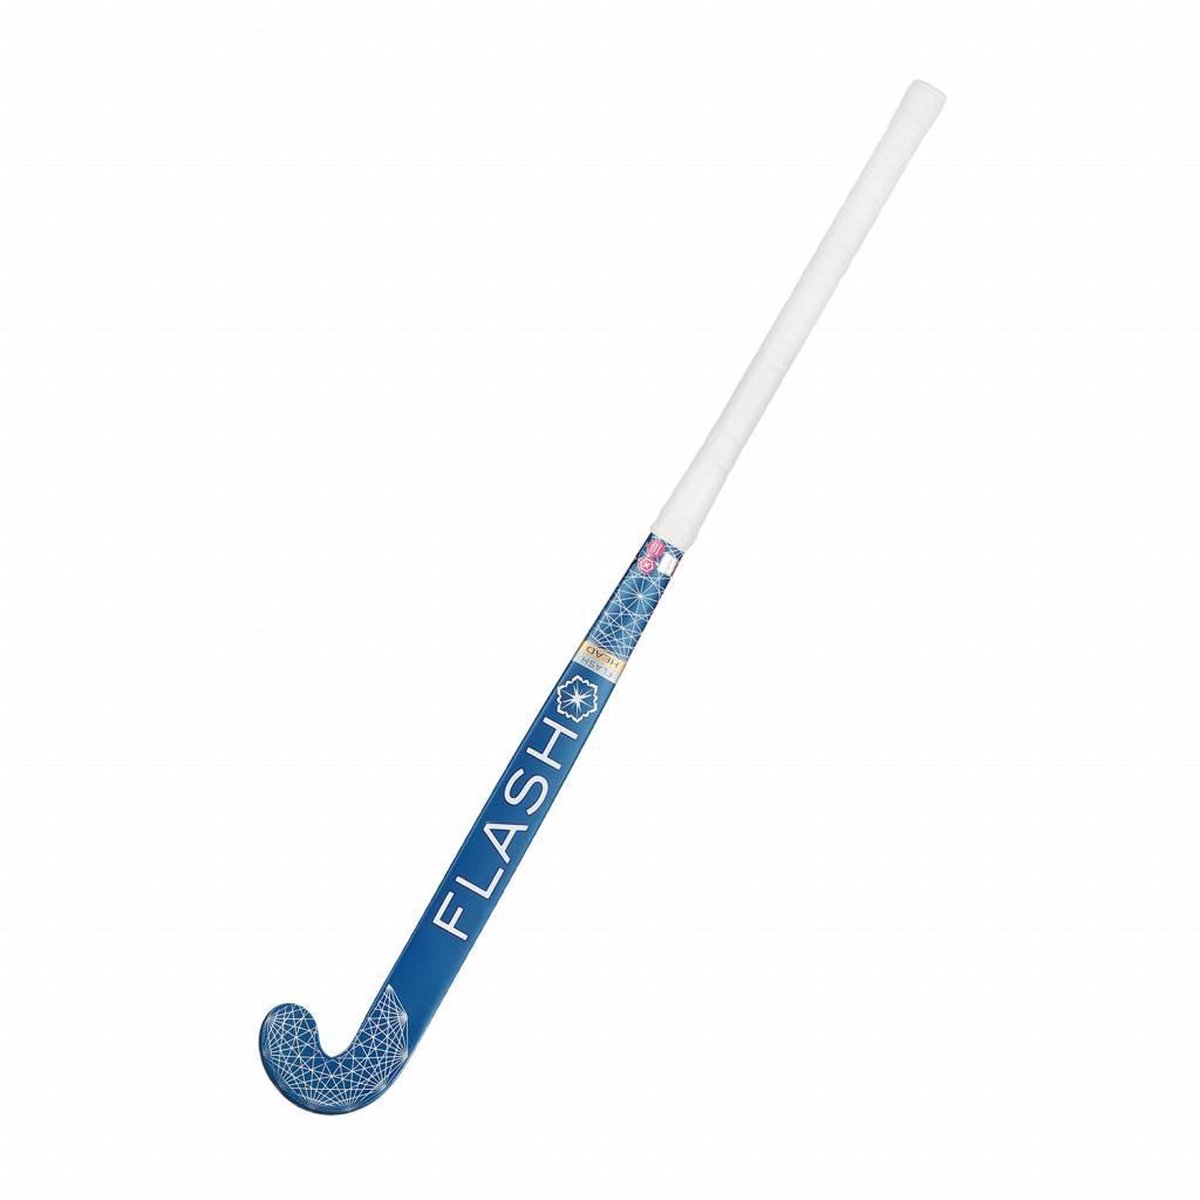 moreel bidden goedkoop FLASH Hockey - Kinder Hockeystick - Blauw - Lengte 34 inch | bol.com